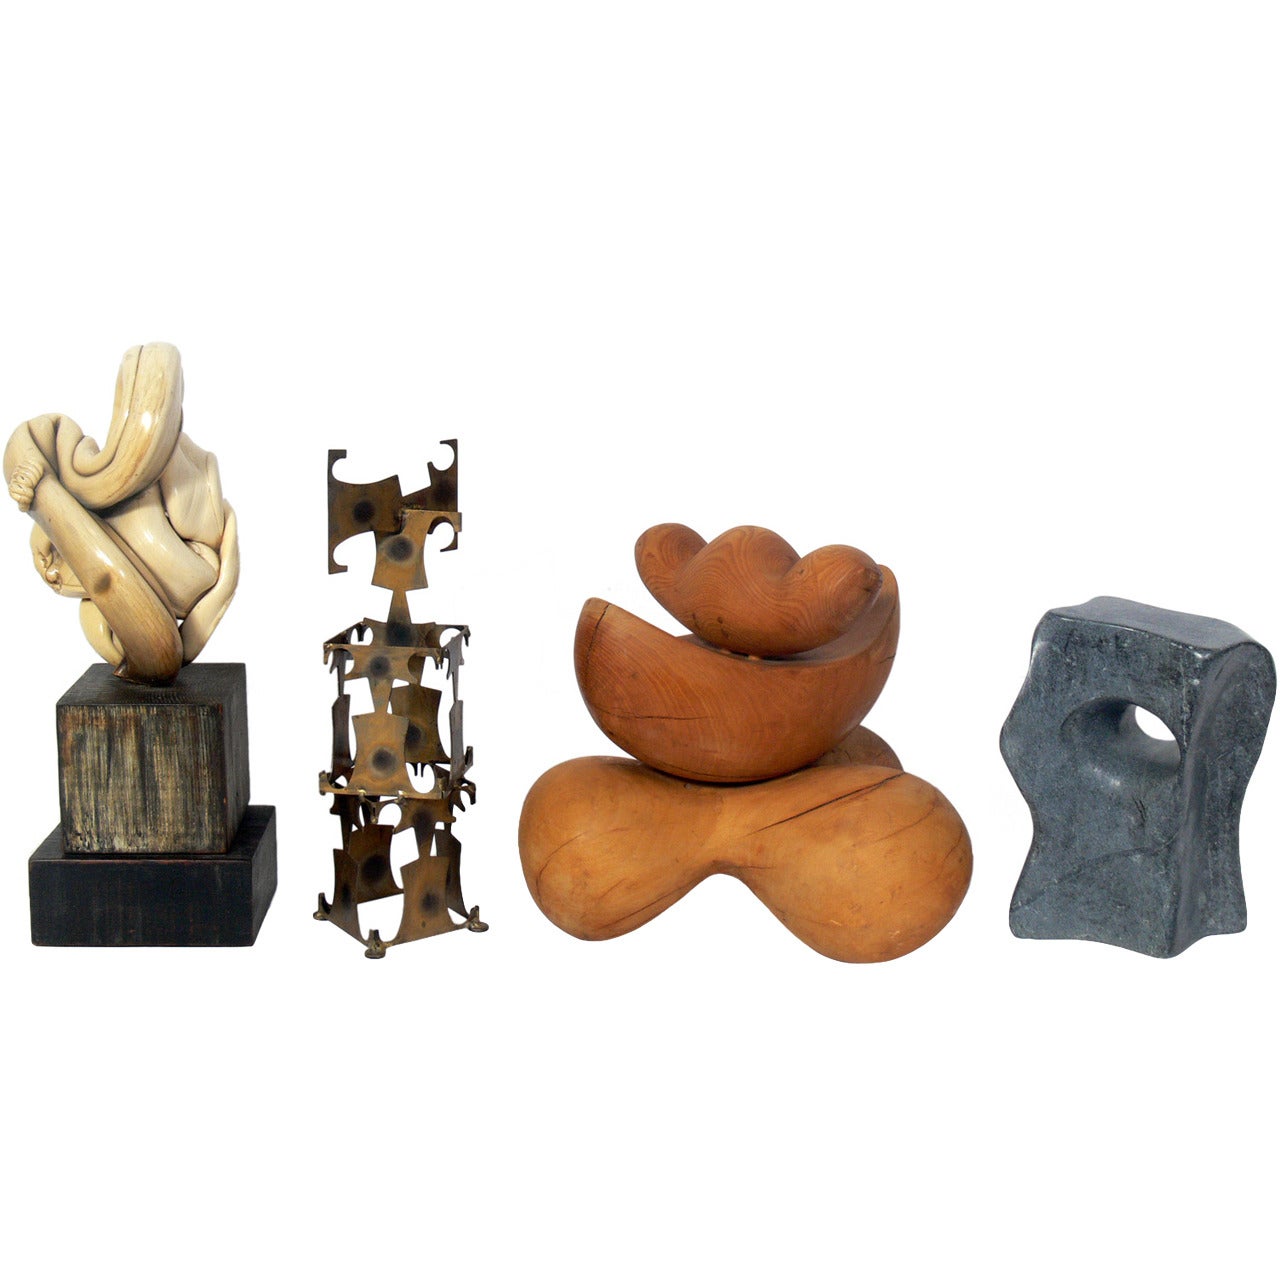 Group of Modernist Sculptures